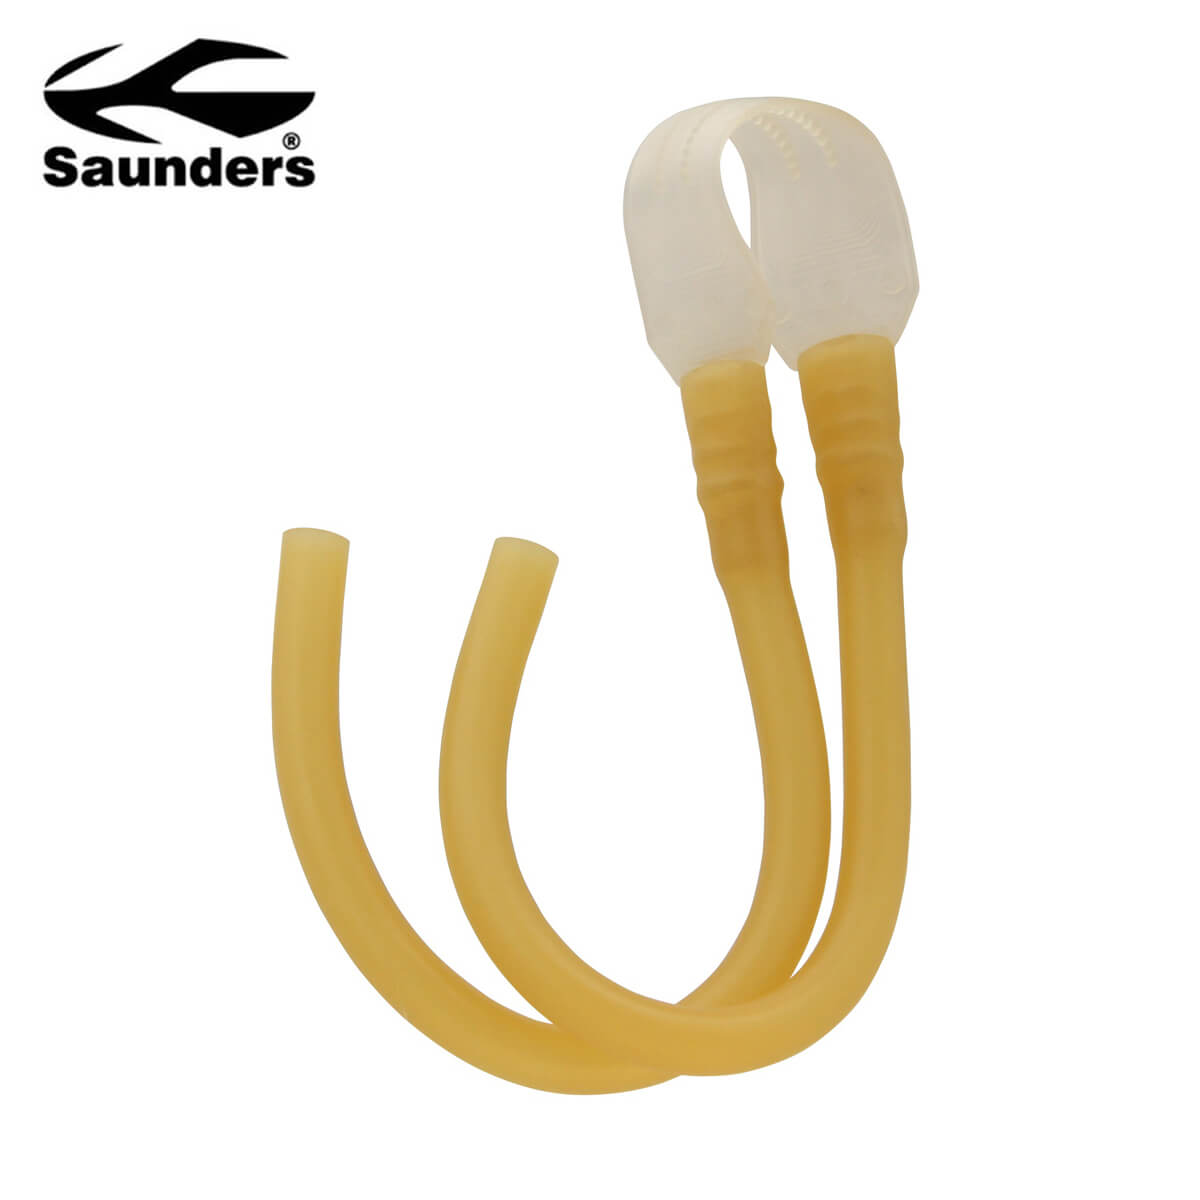 Vendita Saunders fionda wrist rocket wing flatband, vendita online Saunders  fionda wrist rocket wing flatband